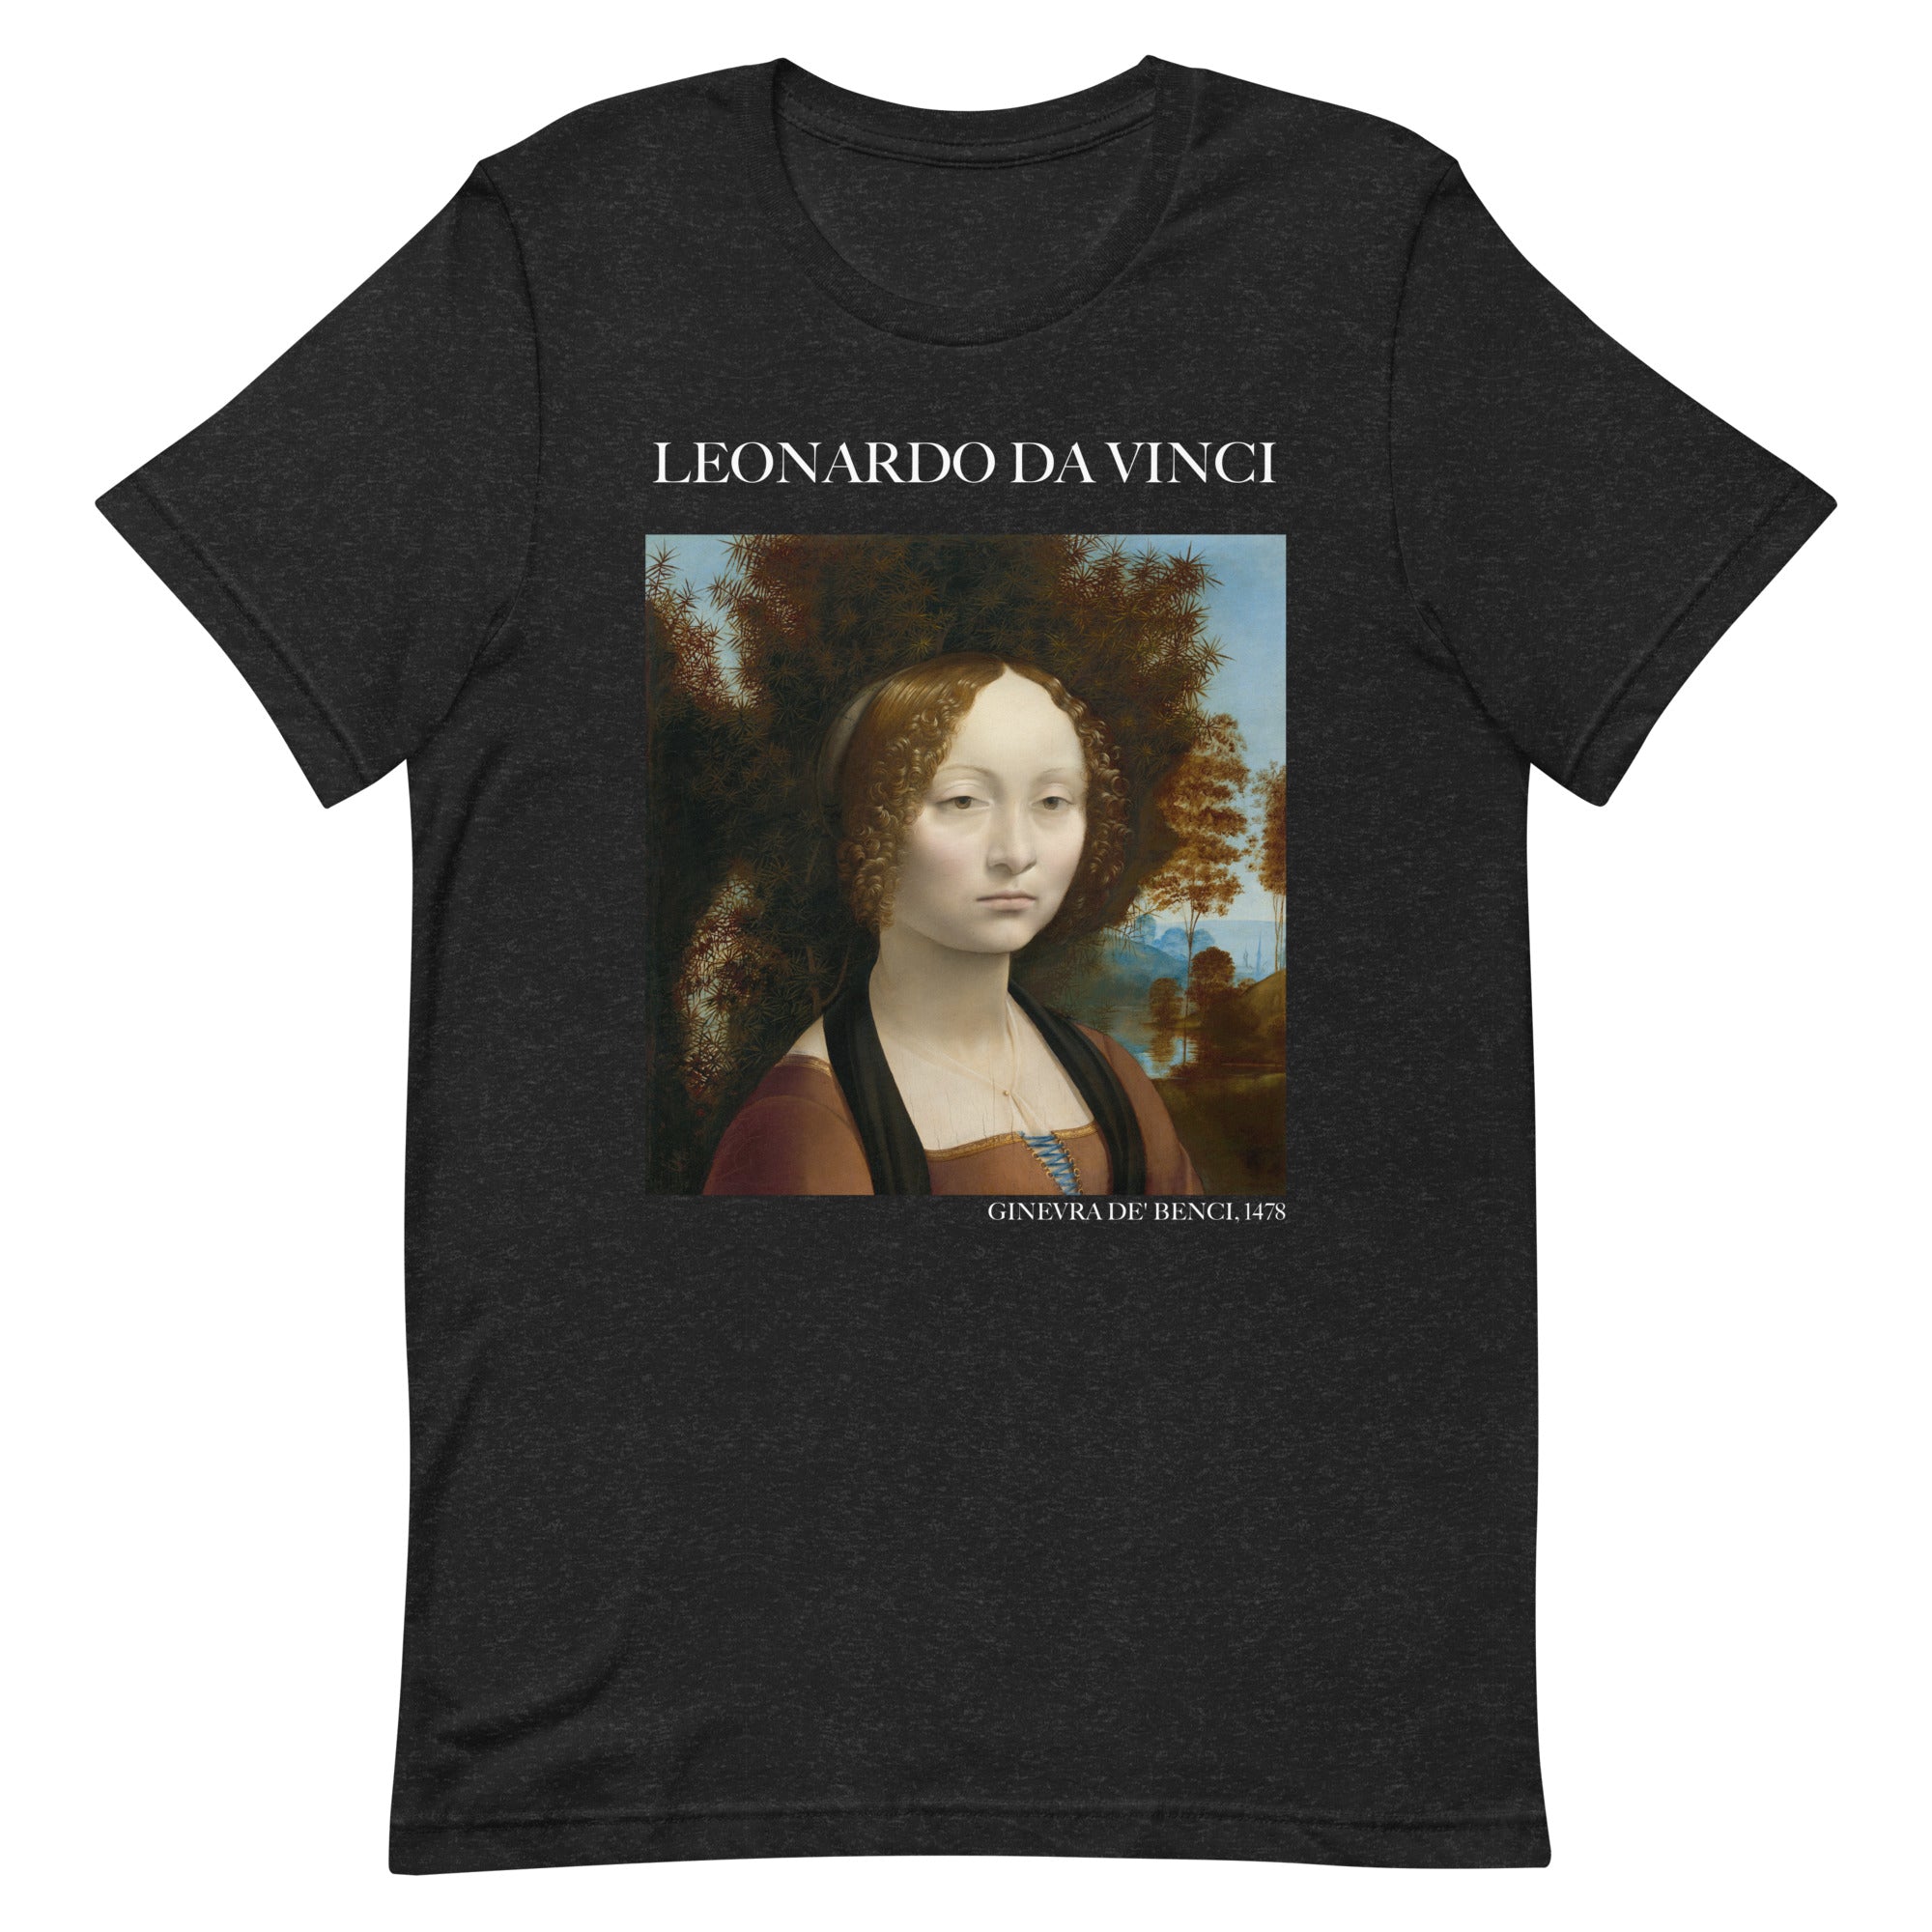 Leonardo da Vinci 'Ginevra de' Benci' Famous Painting T-Shirt | Unisex Classic Art Tee